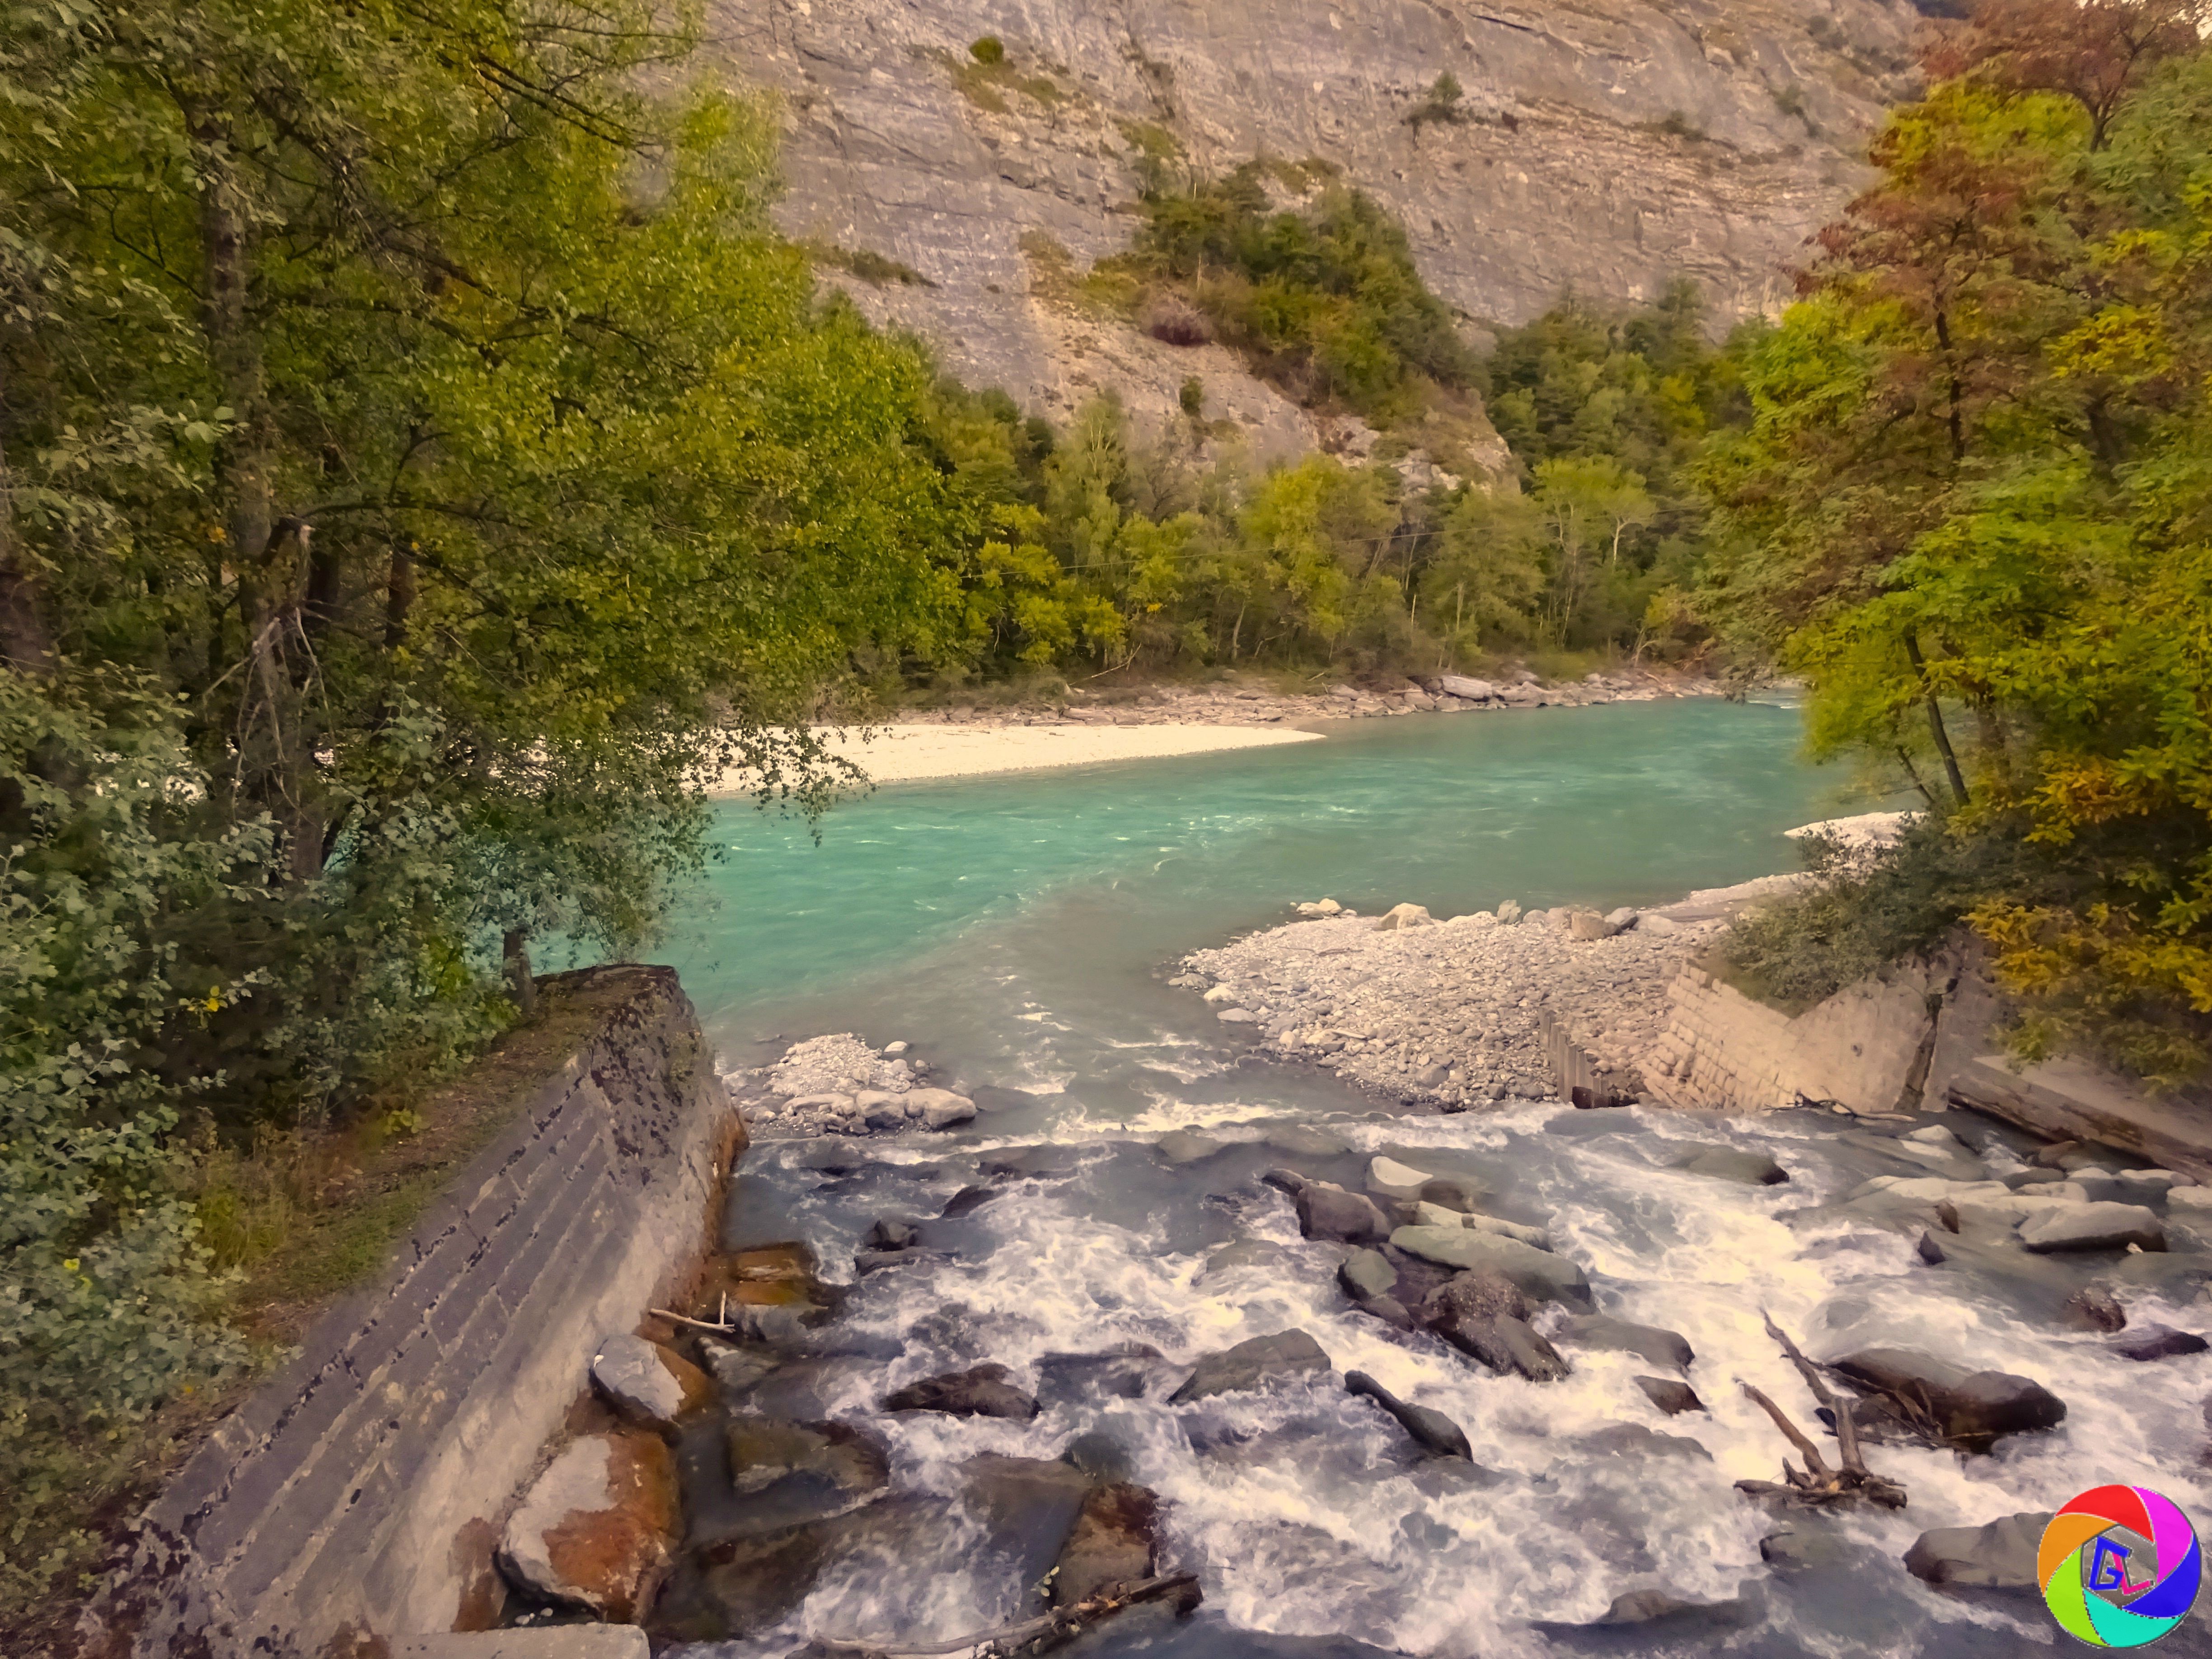 Rivers meet in Chur